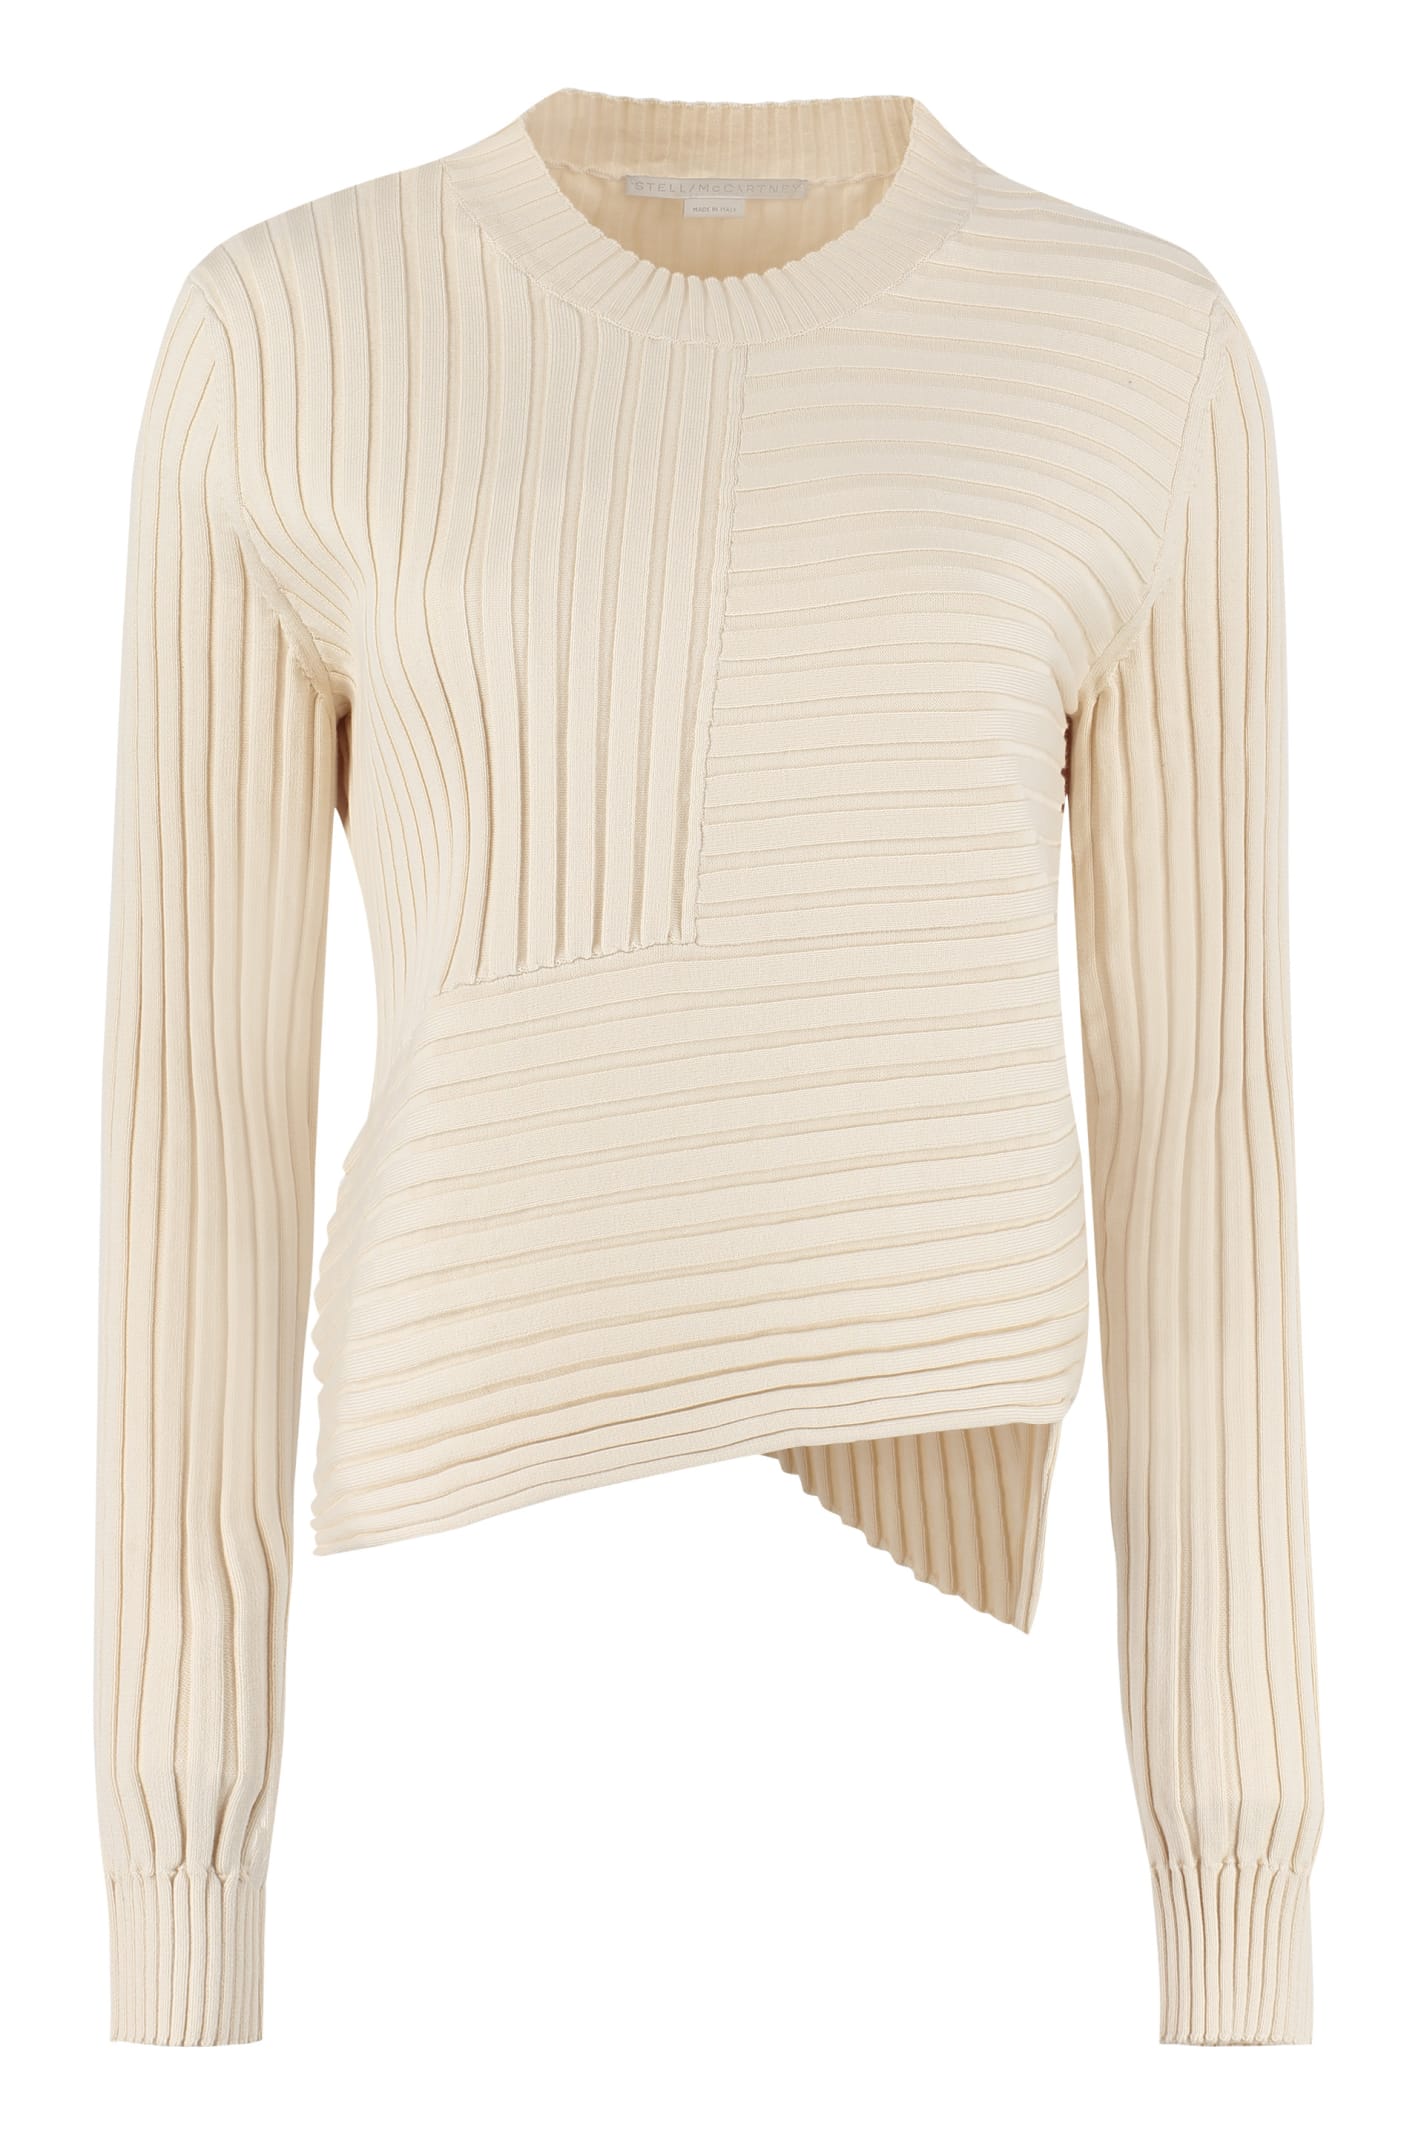 Stella McCartney Ribbed Cotton Sweater